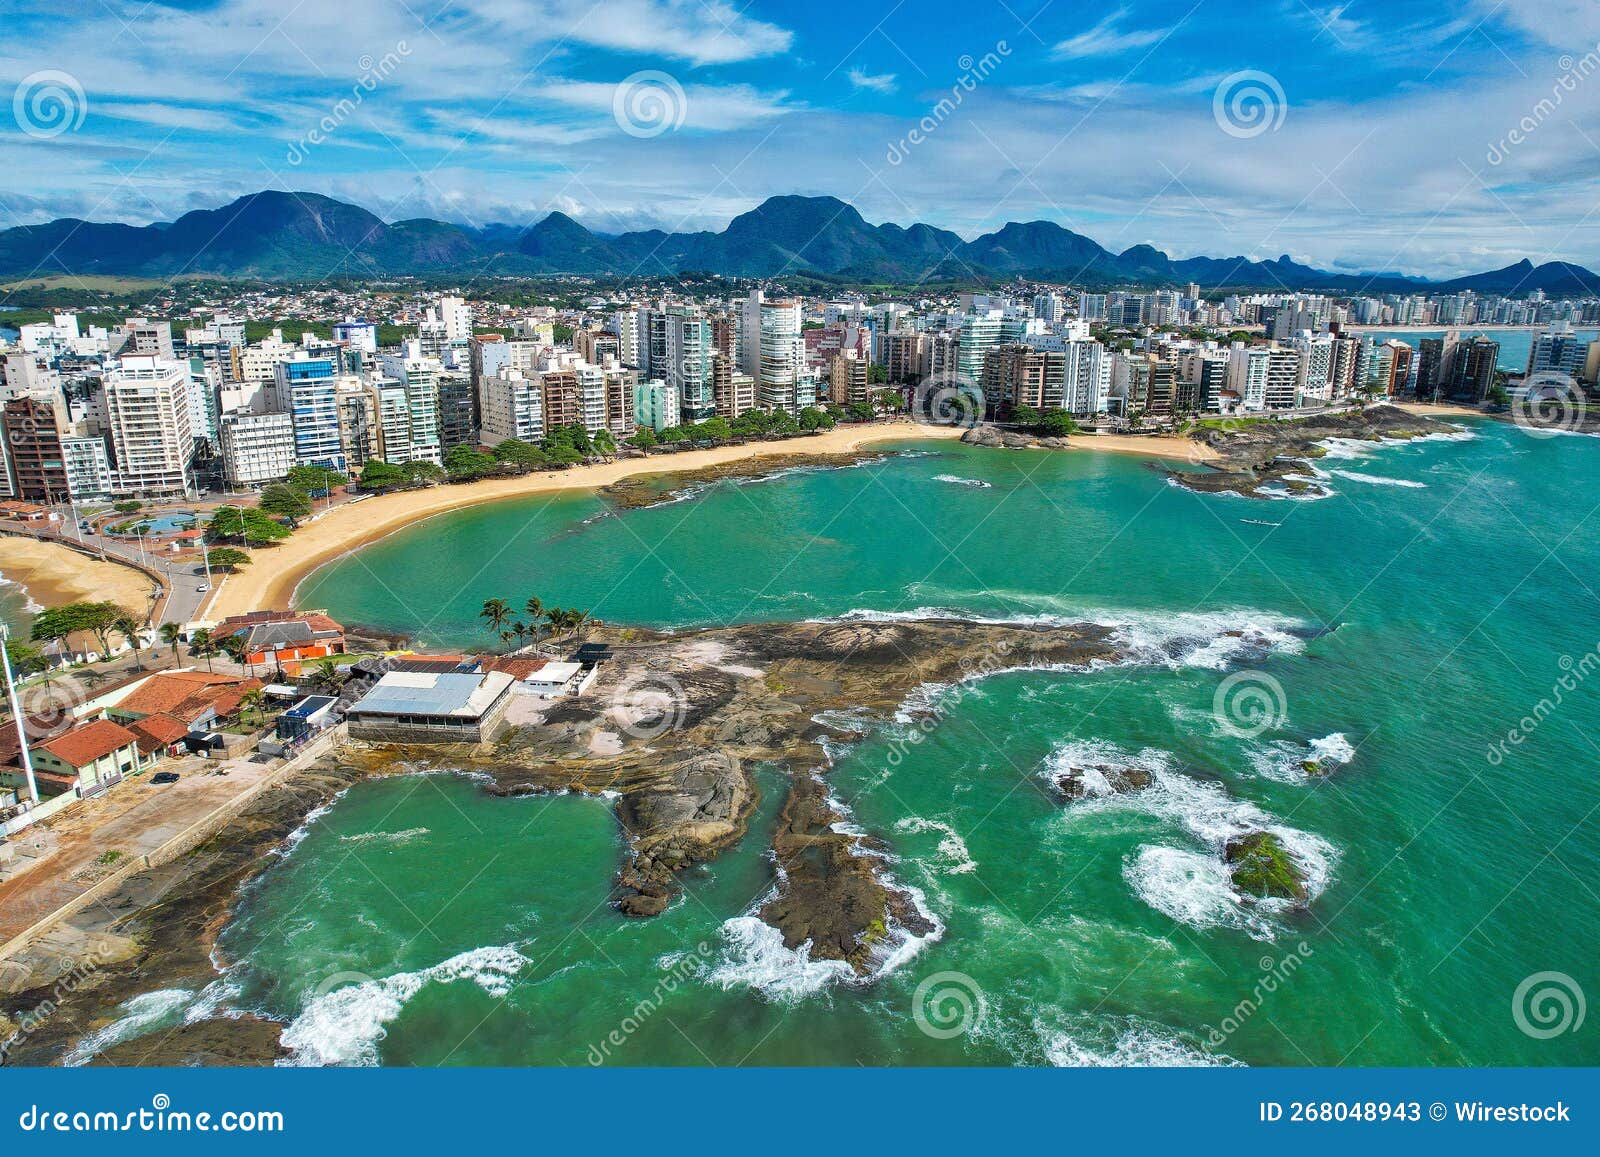 aerial of the areia preta beach in guarapari town in brazil with alongside the blue calm ocean